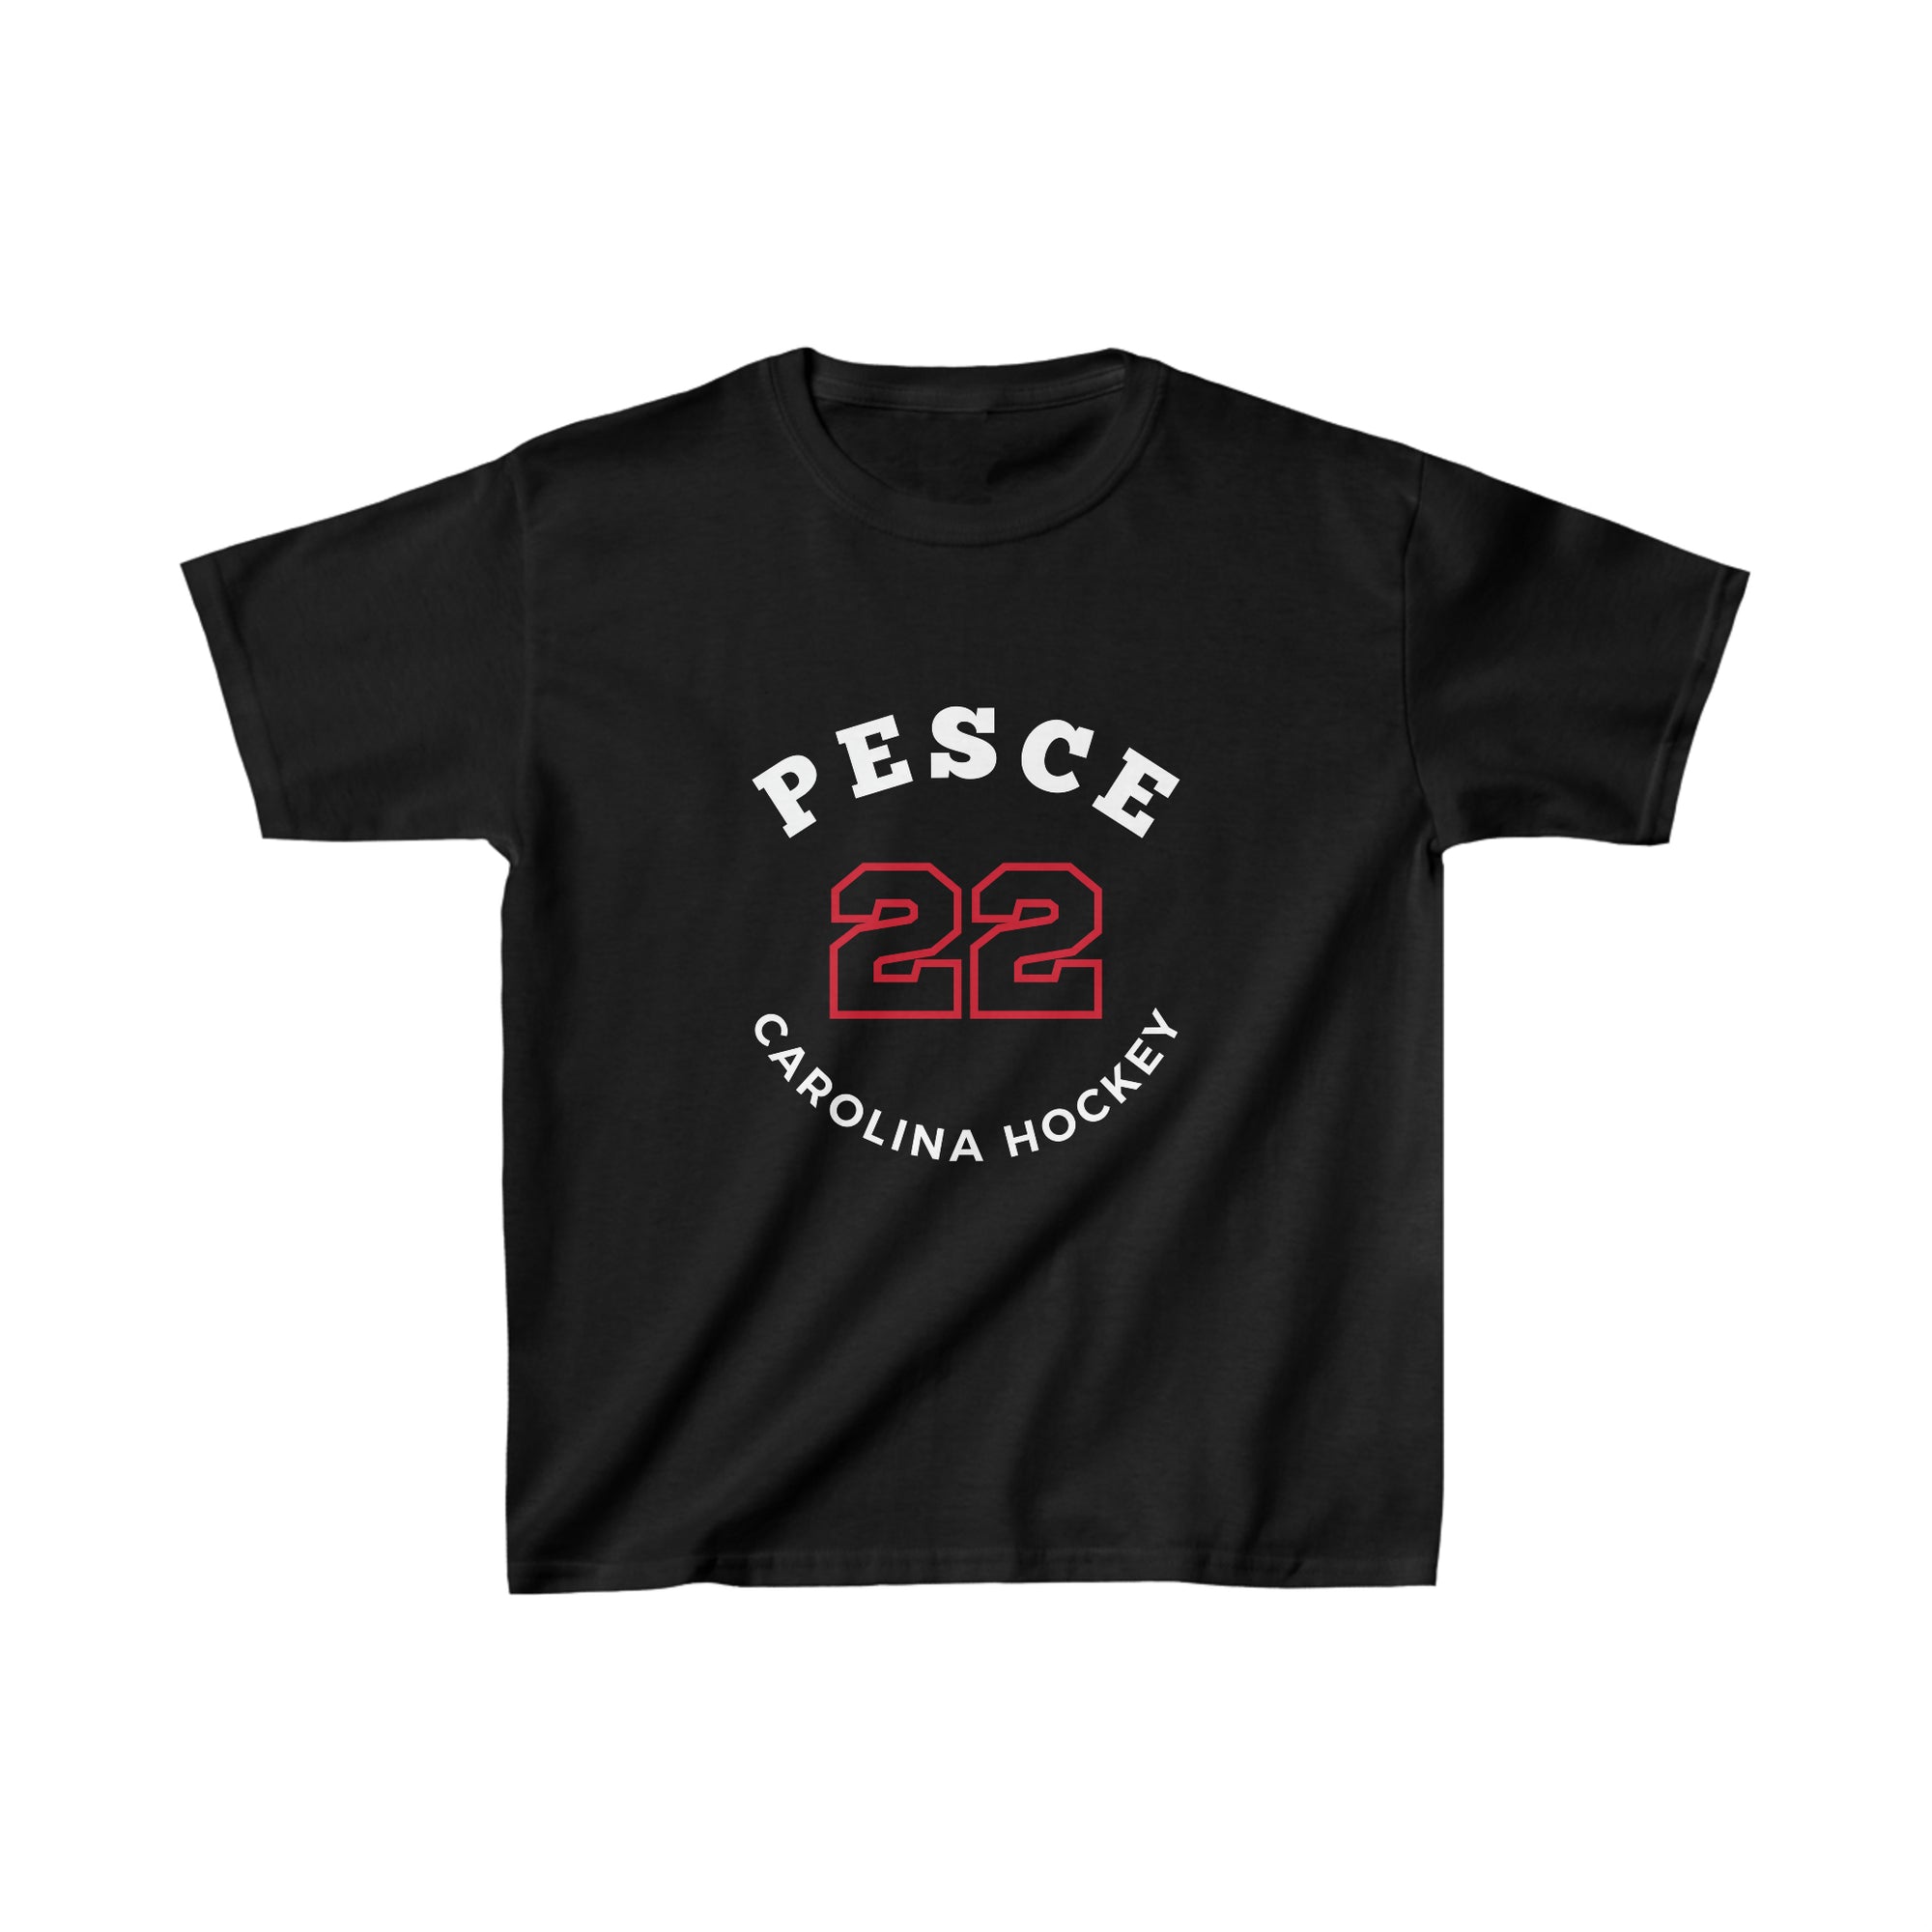 Pesce 22 Carolina Hockey Number Arch Design Kids Tee